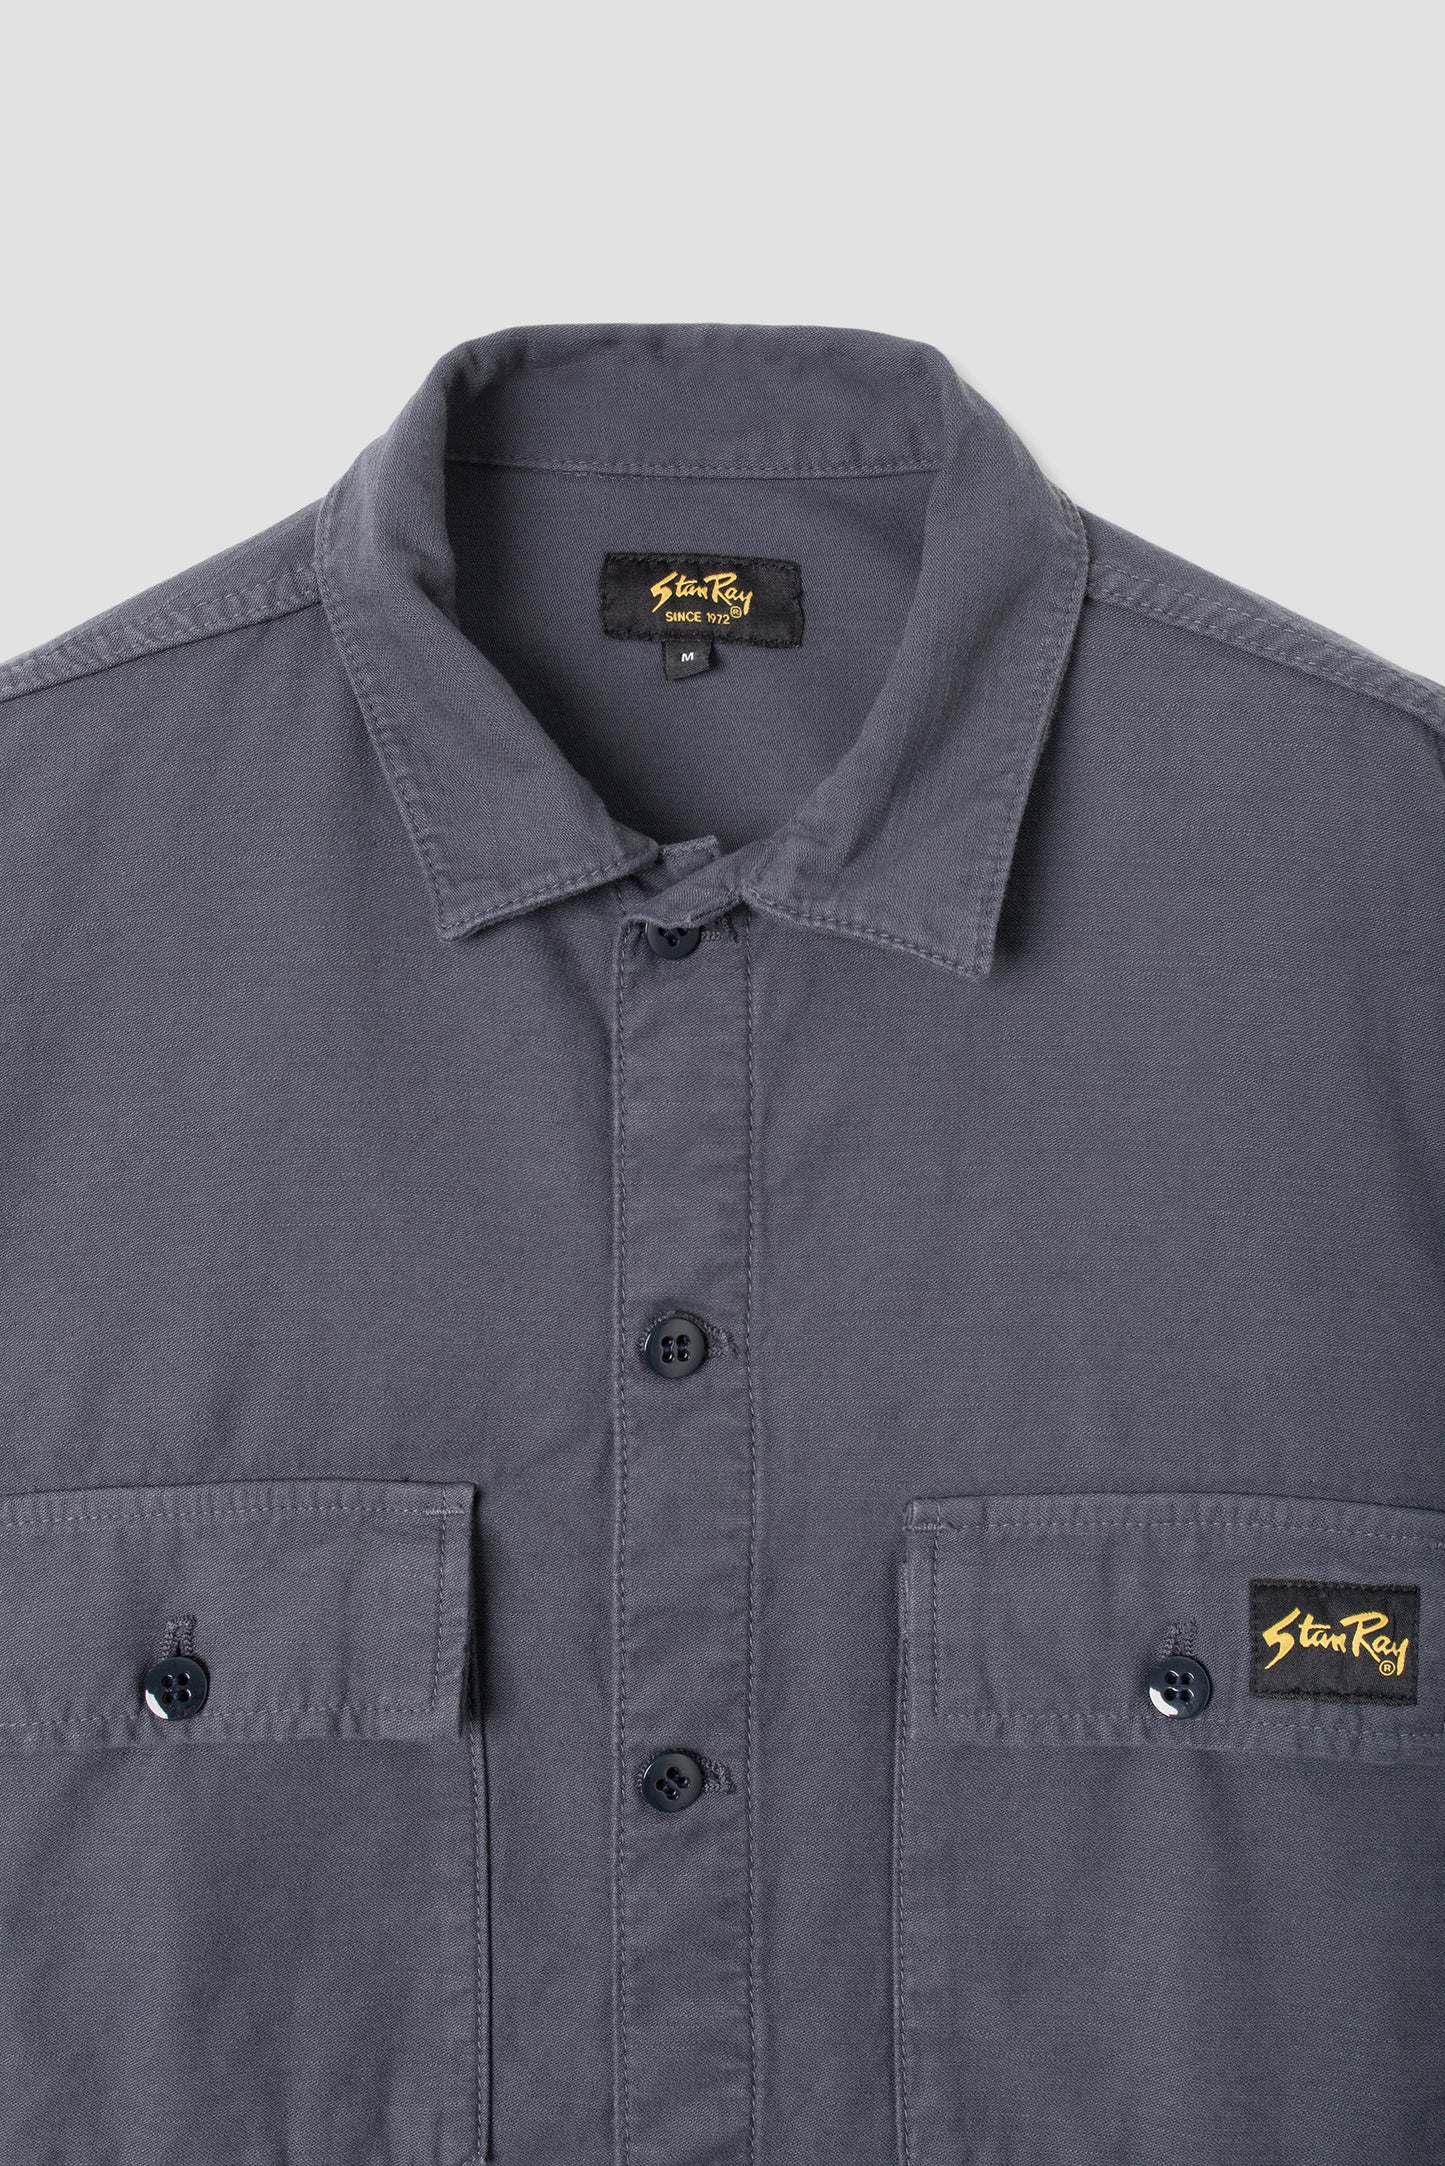 CPO Shirt - Navy Sateen